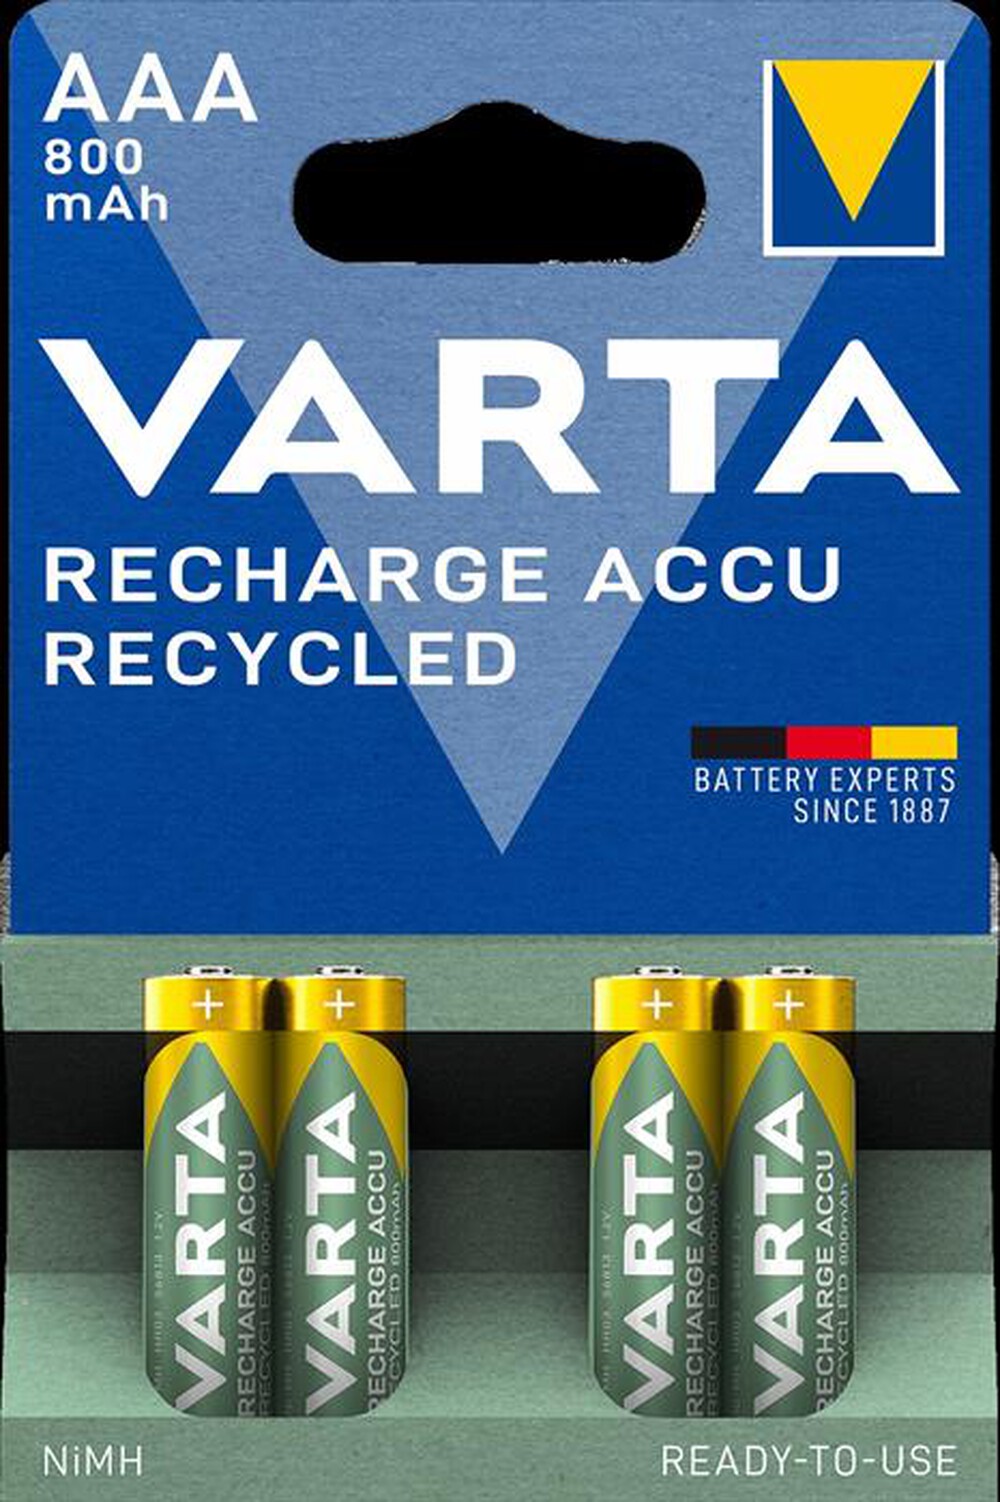 "VARTA - AAA MINISTILO RECHARGE ACCU RECYCLED X4 800 MAH"